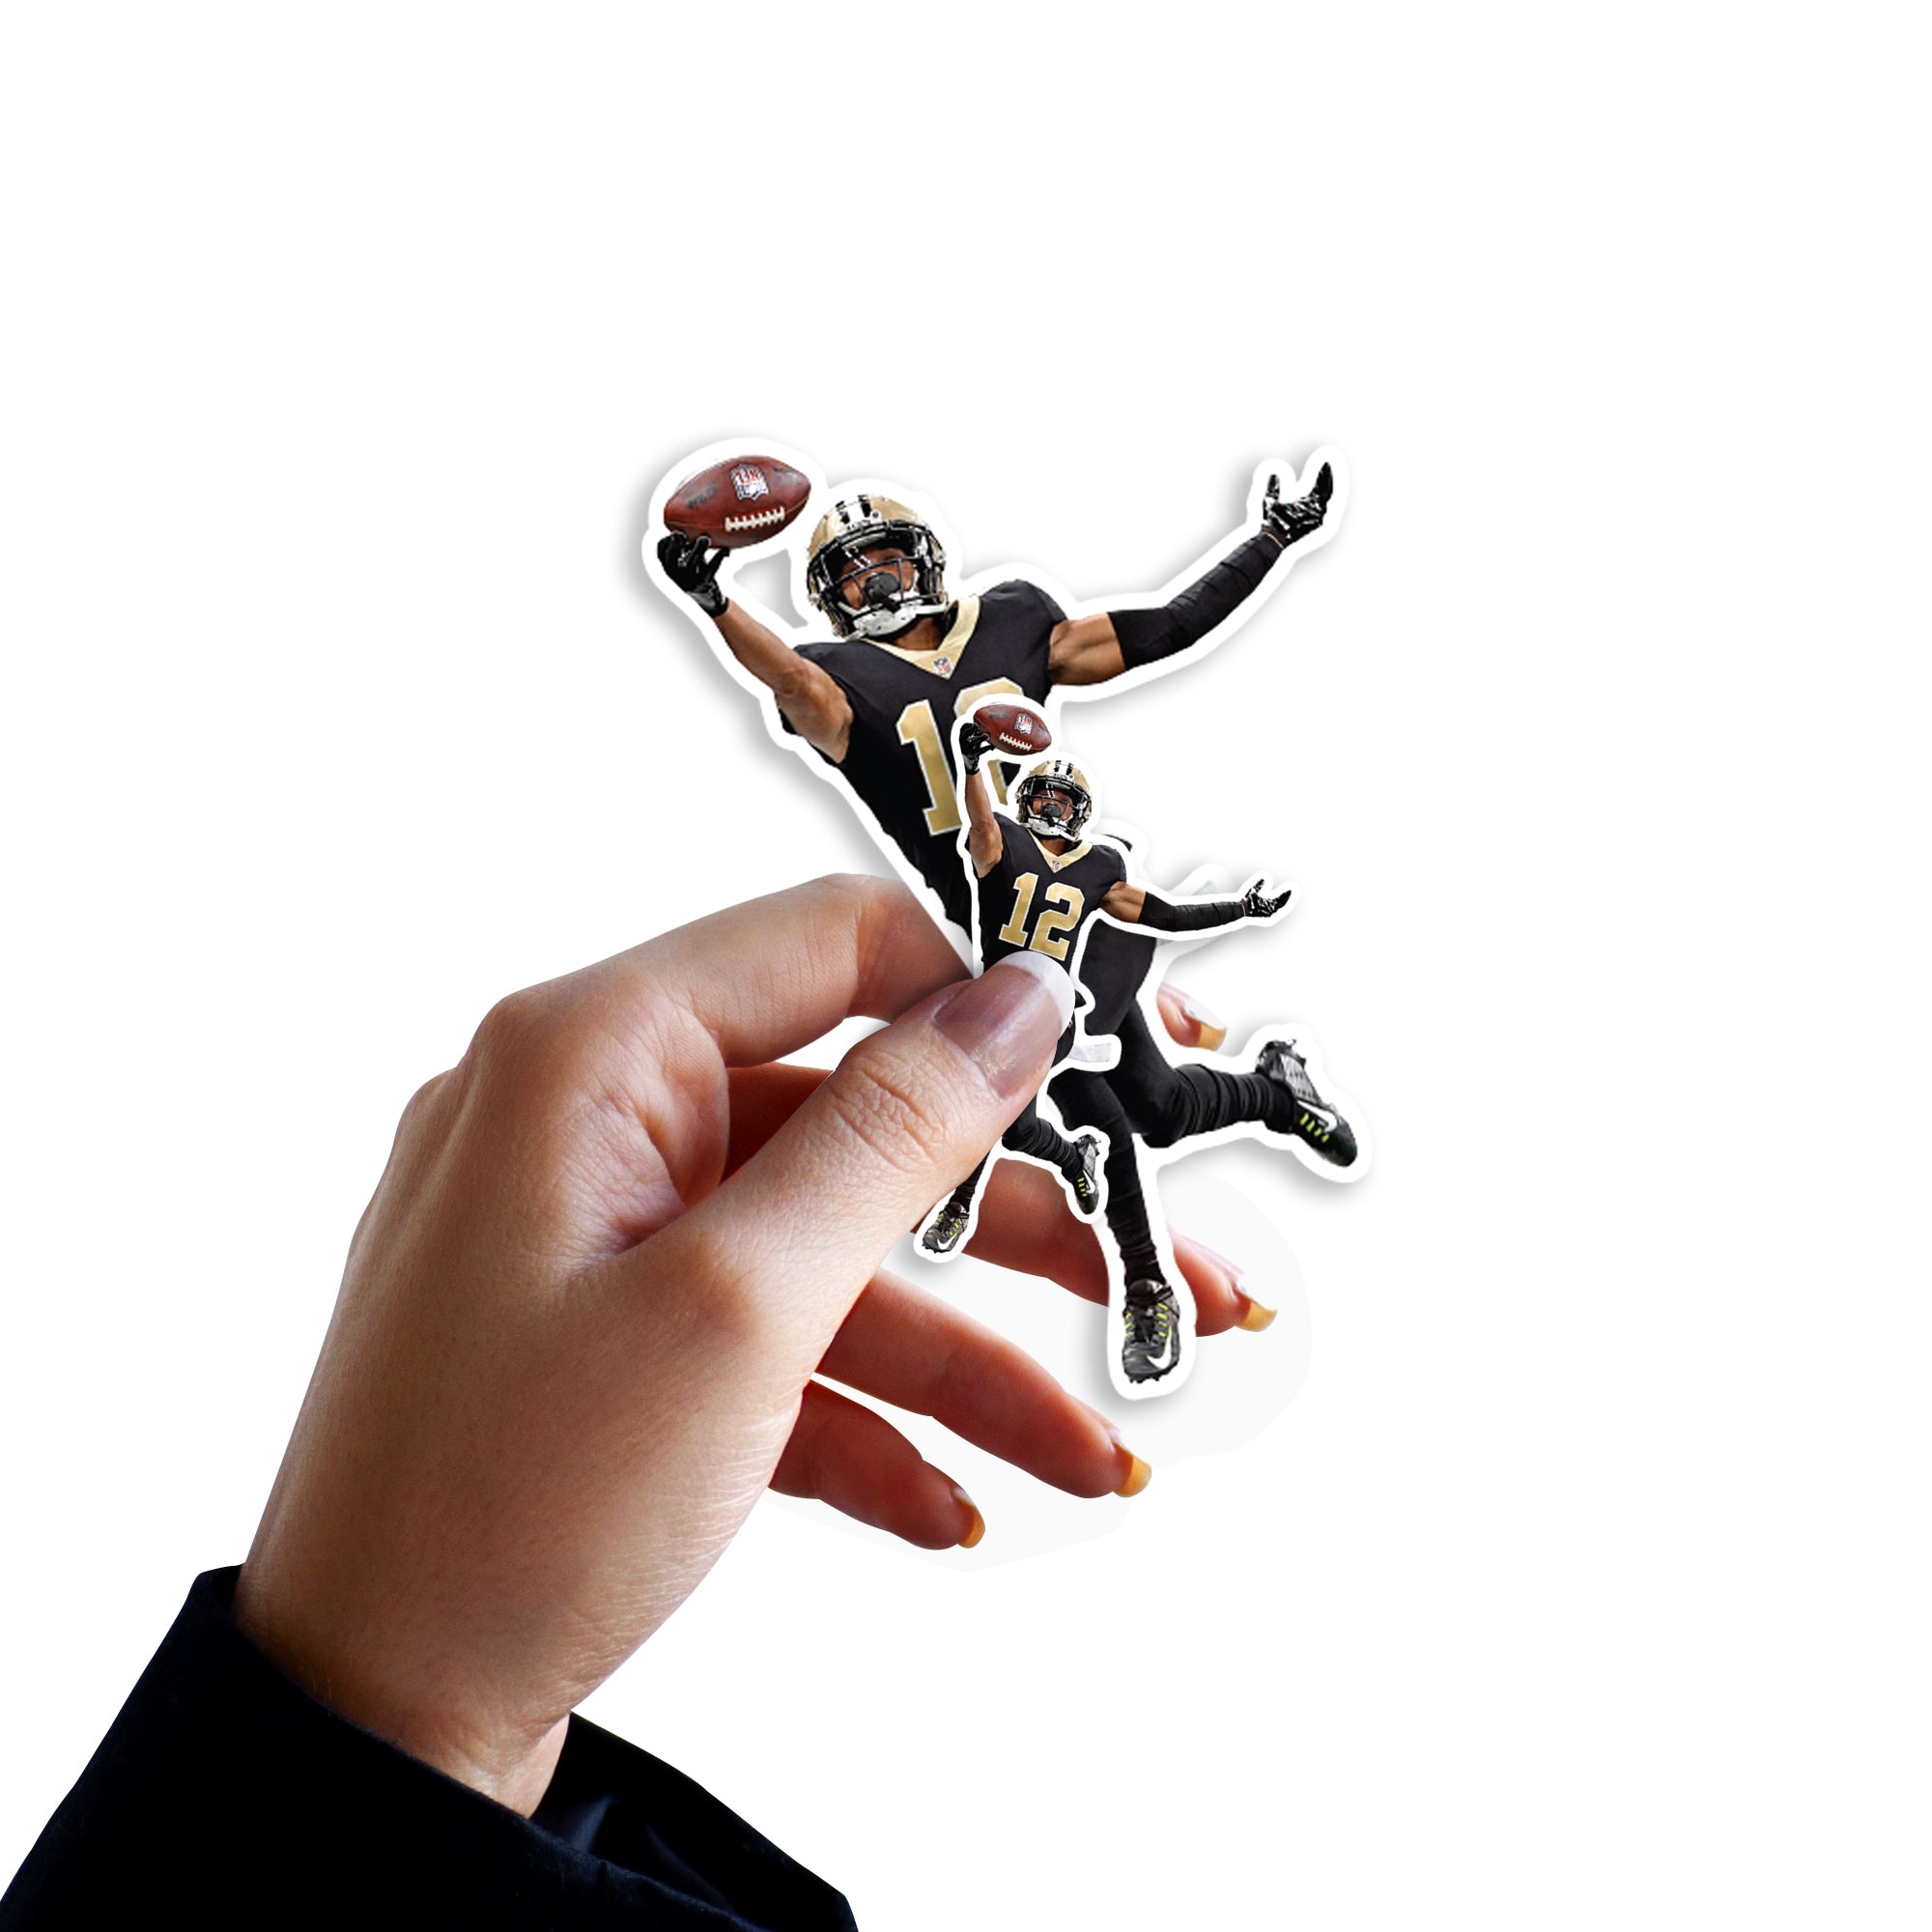 New Orleans Saints: Chris Olave 2022 Mini Cardstock Cutout - Officiall –  Fathead